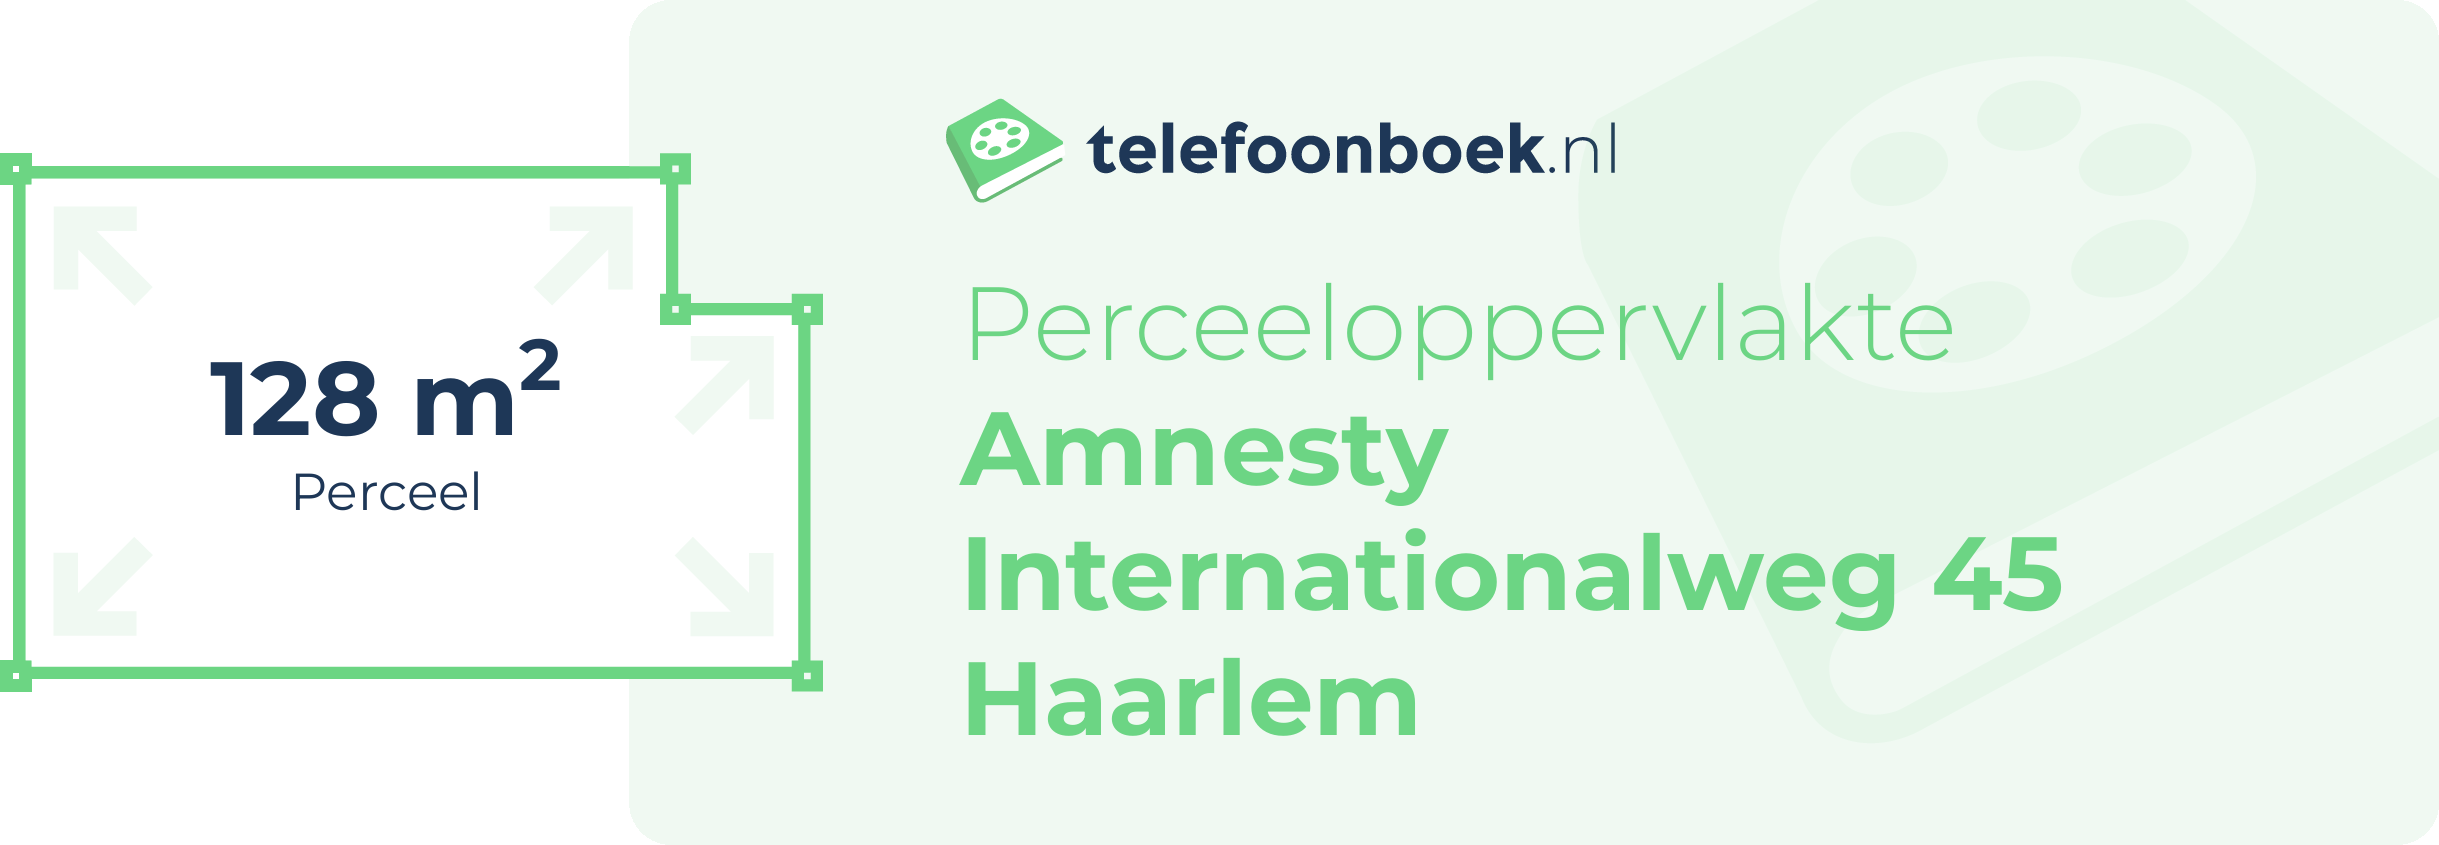 Perceeloppervlakte Amnesty Internationalweg 45 Haarlem